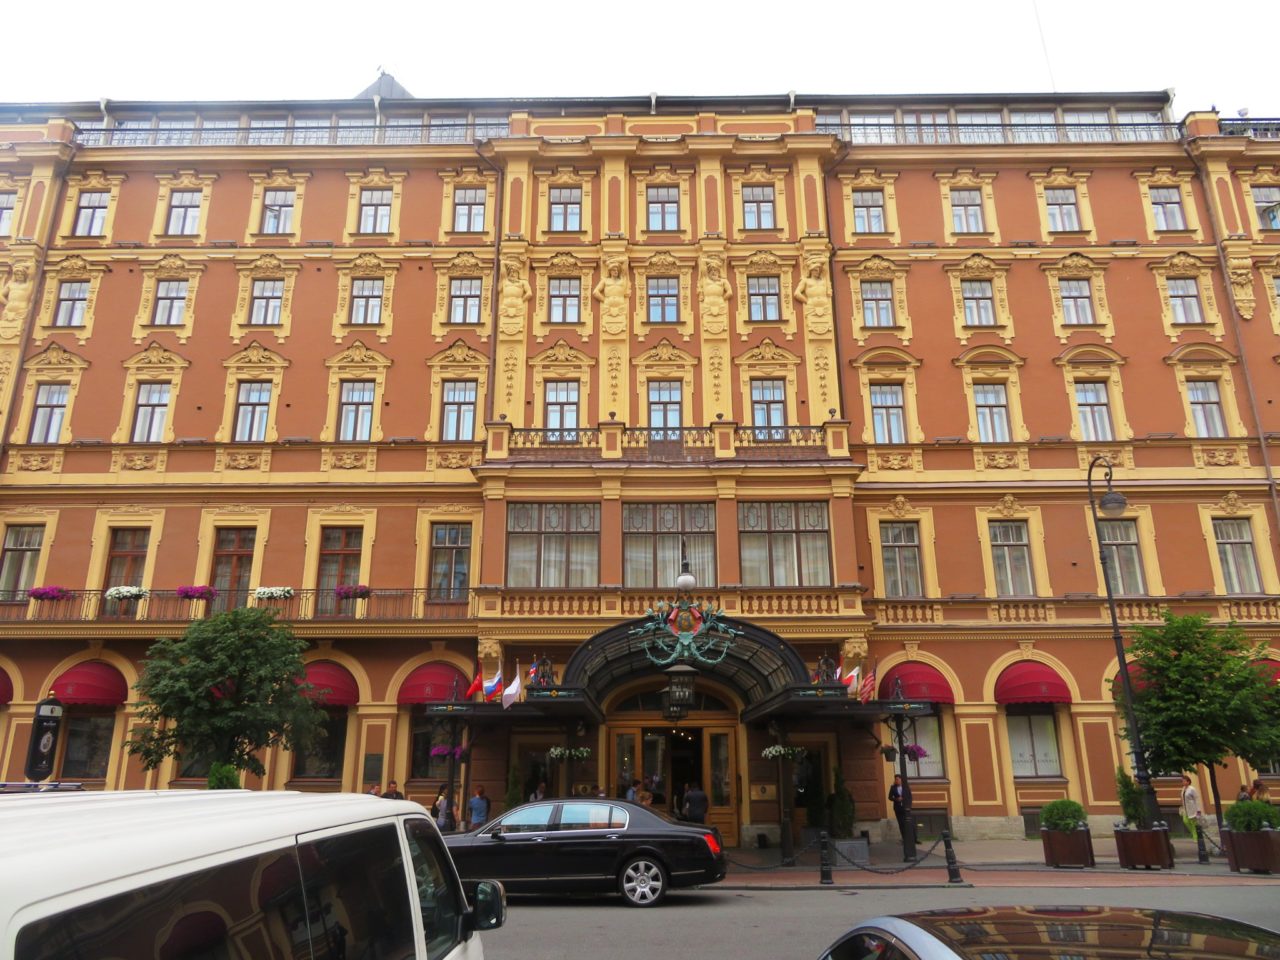 The Belmond Grand Hotel Europe in St. Petersburg, Russia